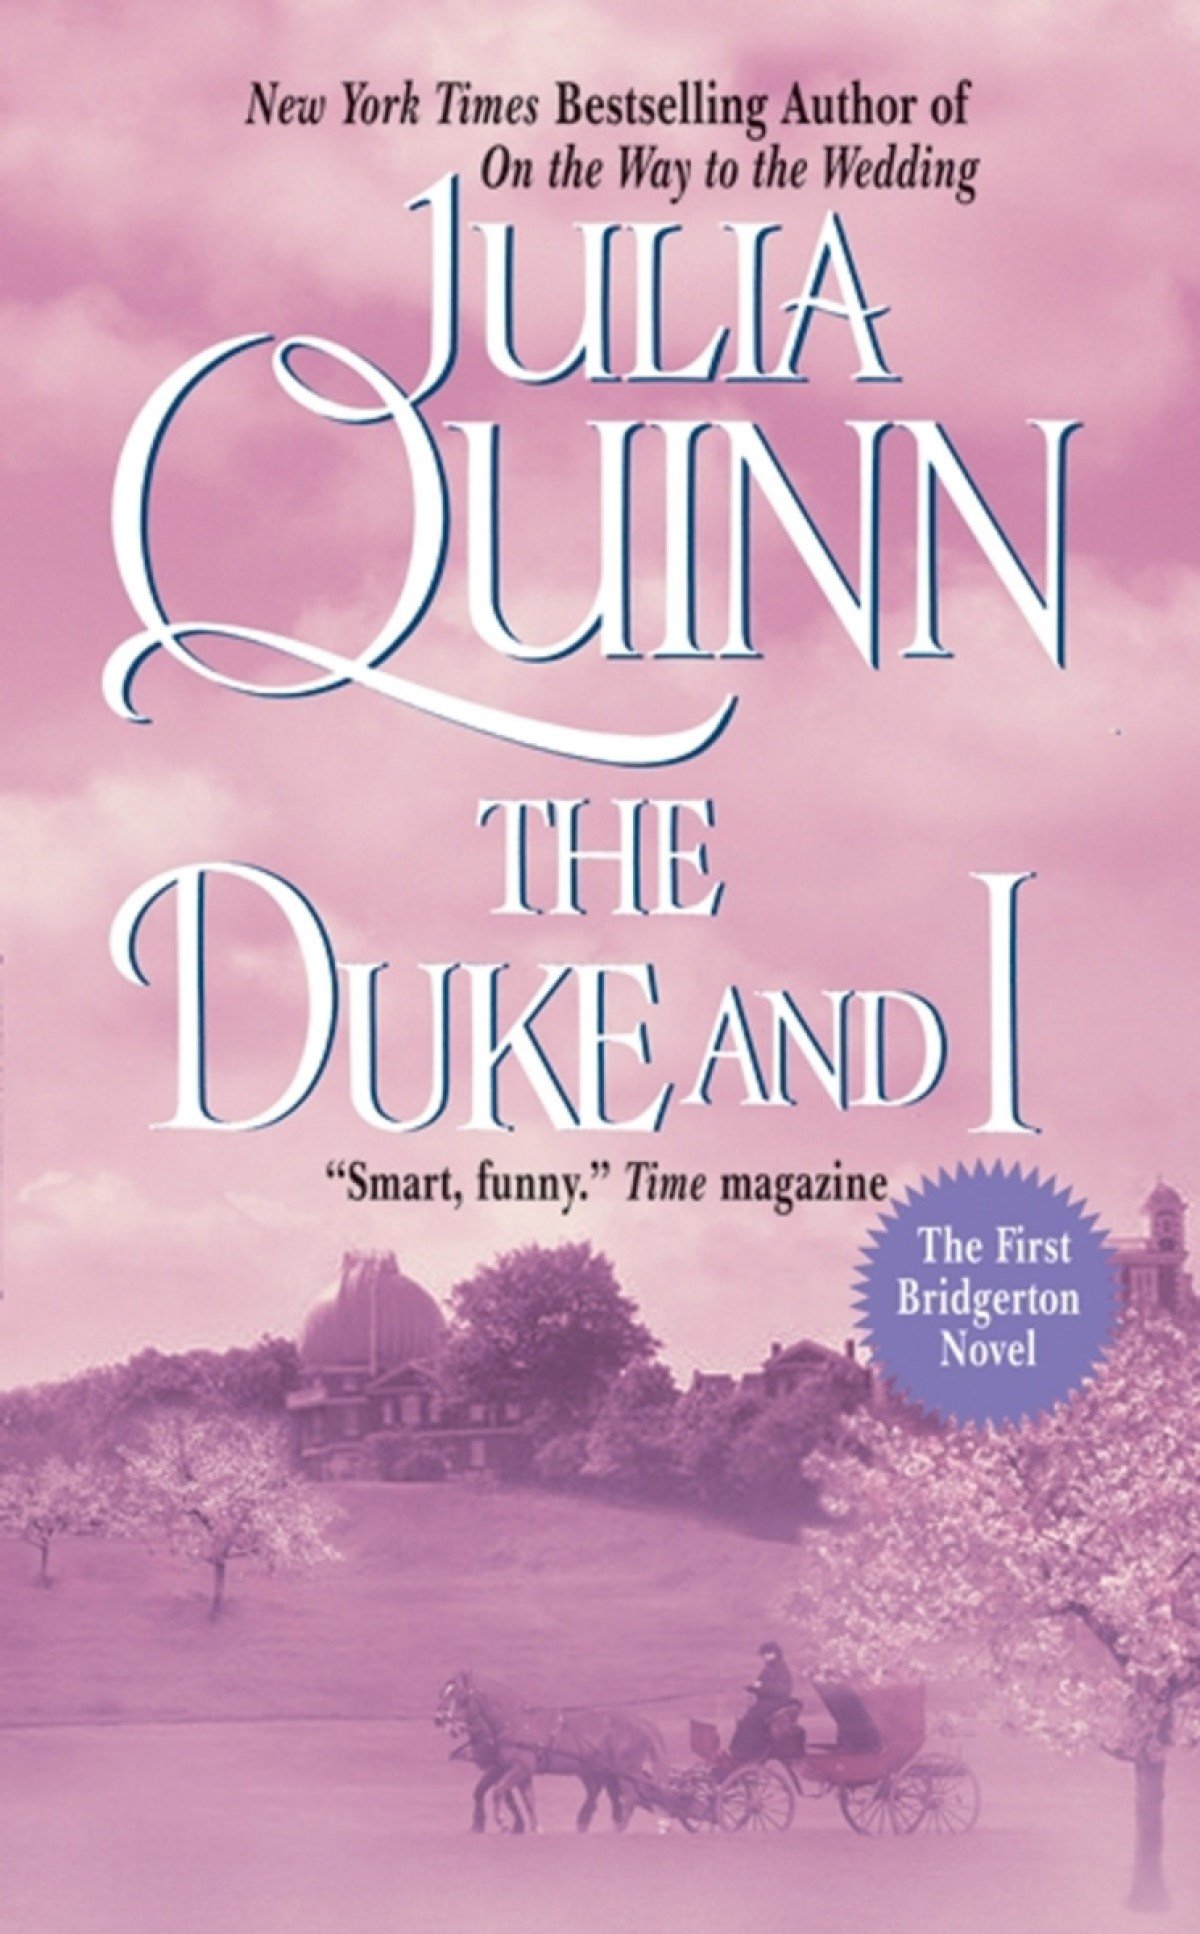 the Duke and I novel by Julia Quinn